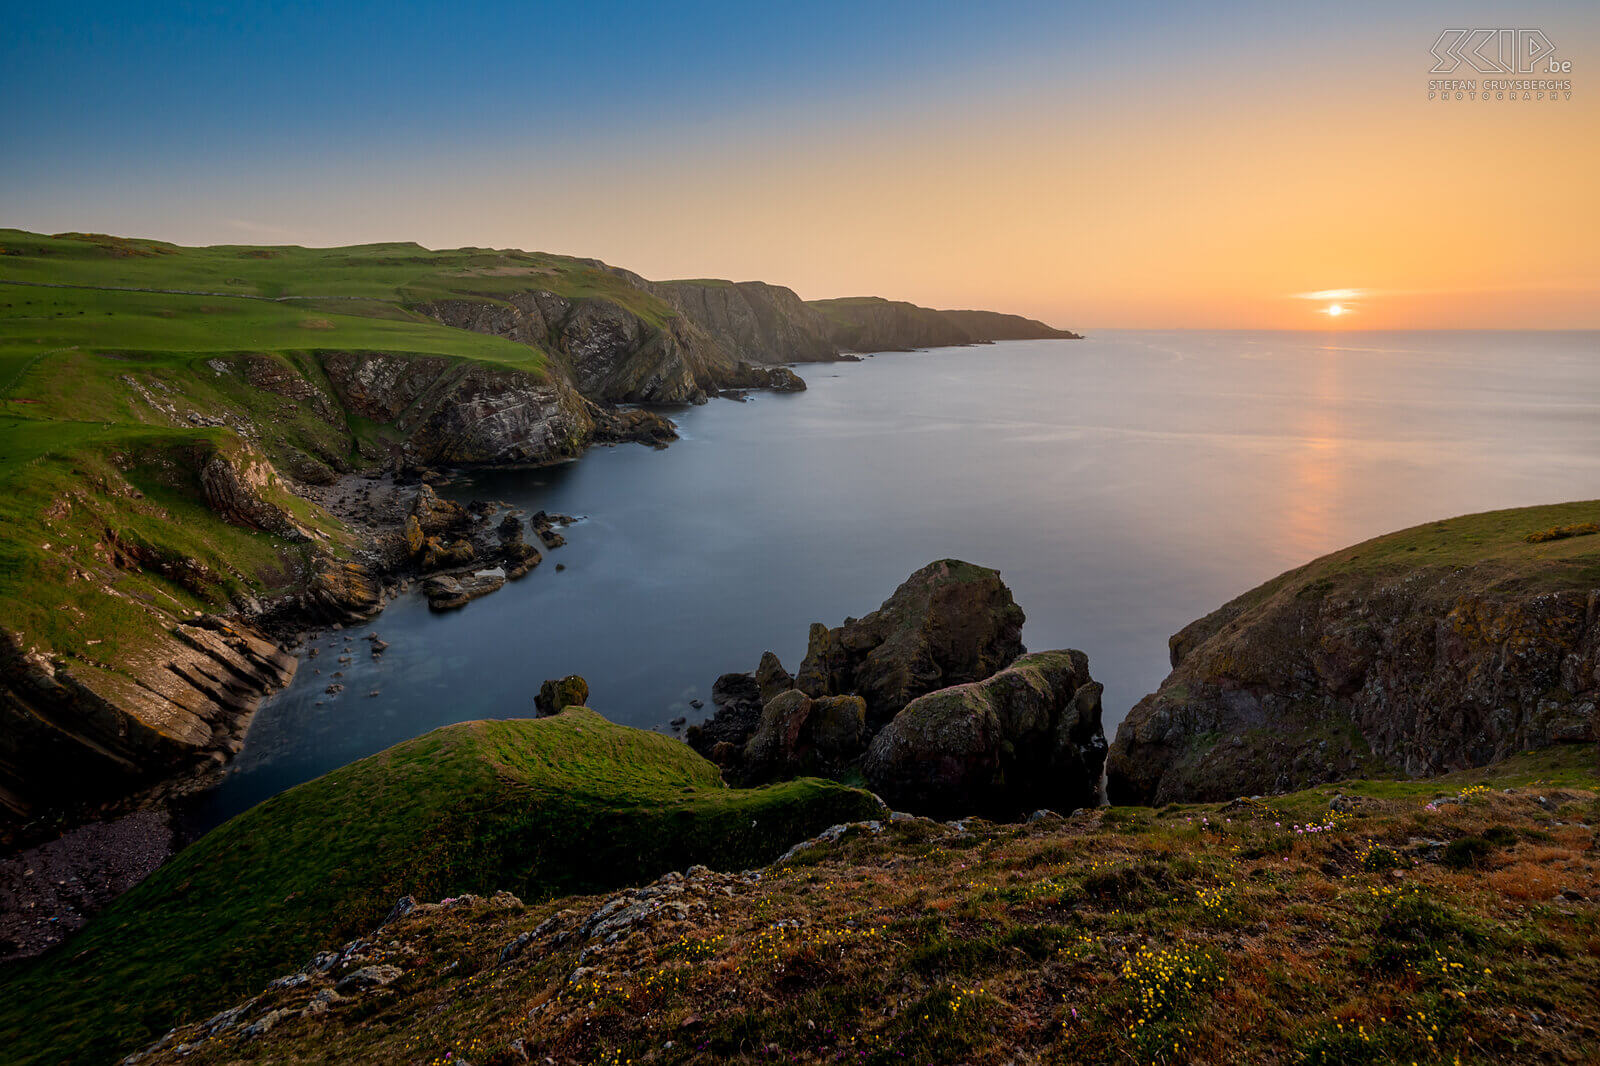 St Abbs Head - Sunset Sunset on the beautiful coasts of St Abbs on the Scottish east coast. Stefan Cruysberghs